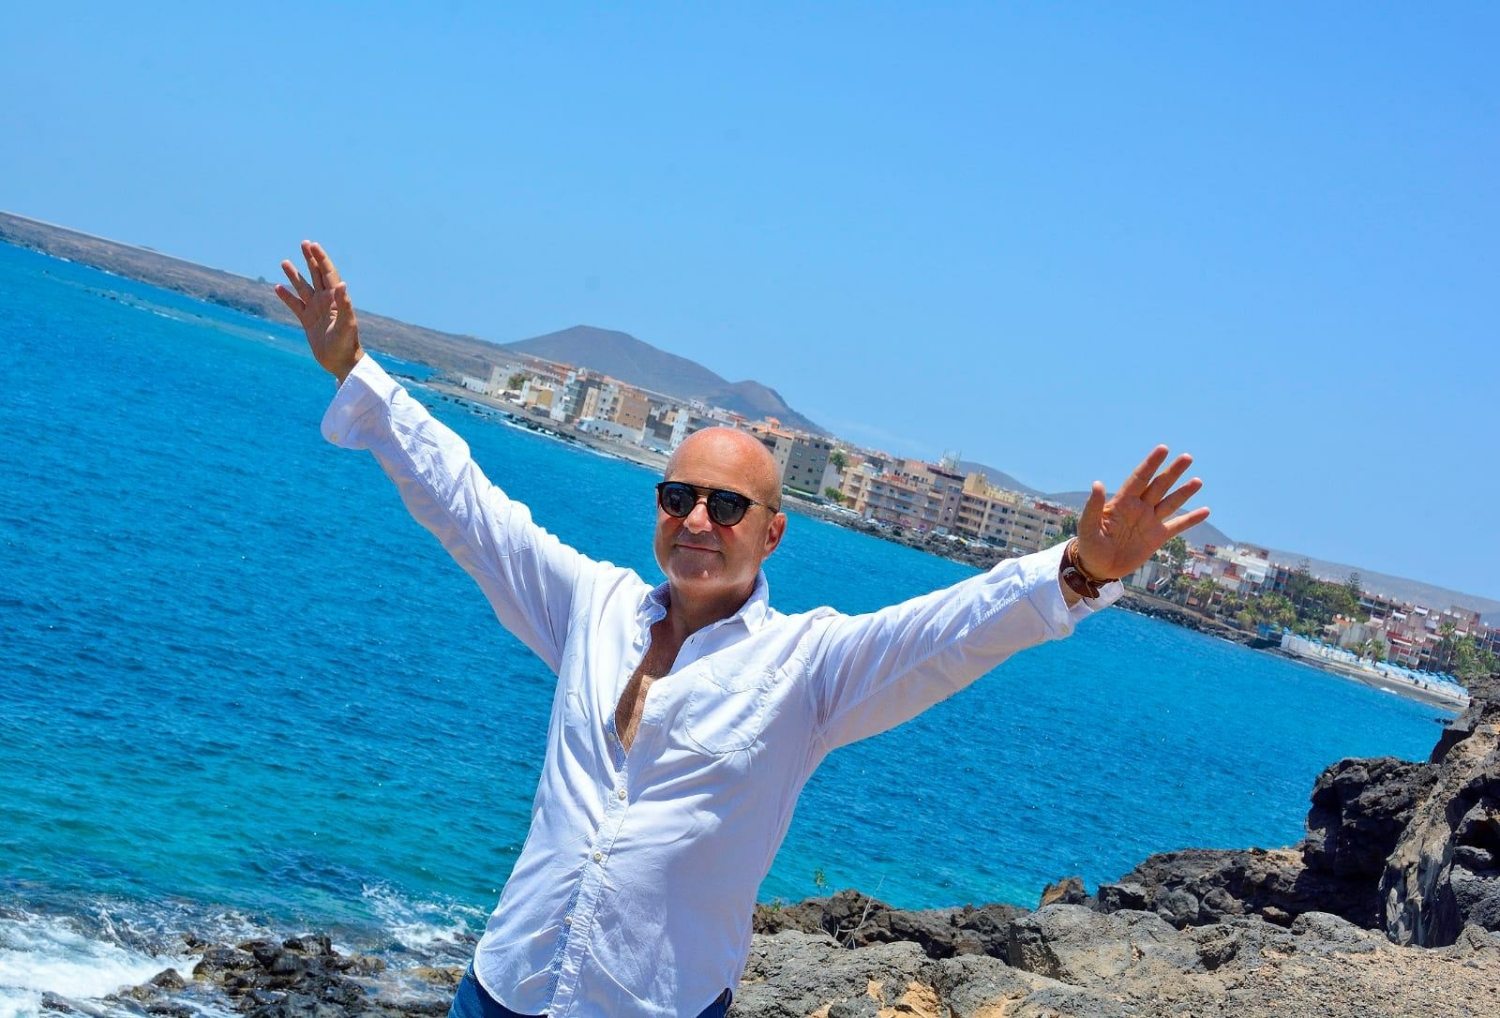 Riccardo Barbuti a Tenerife in una giornata di sole